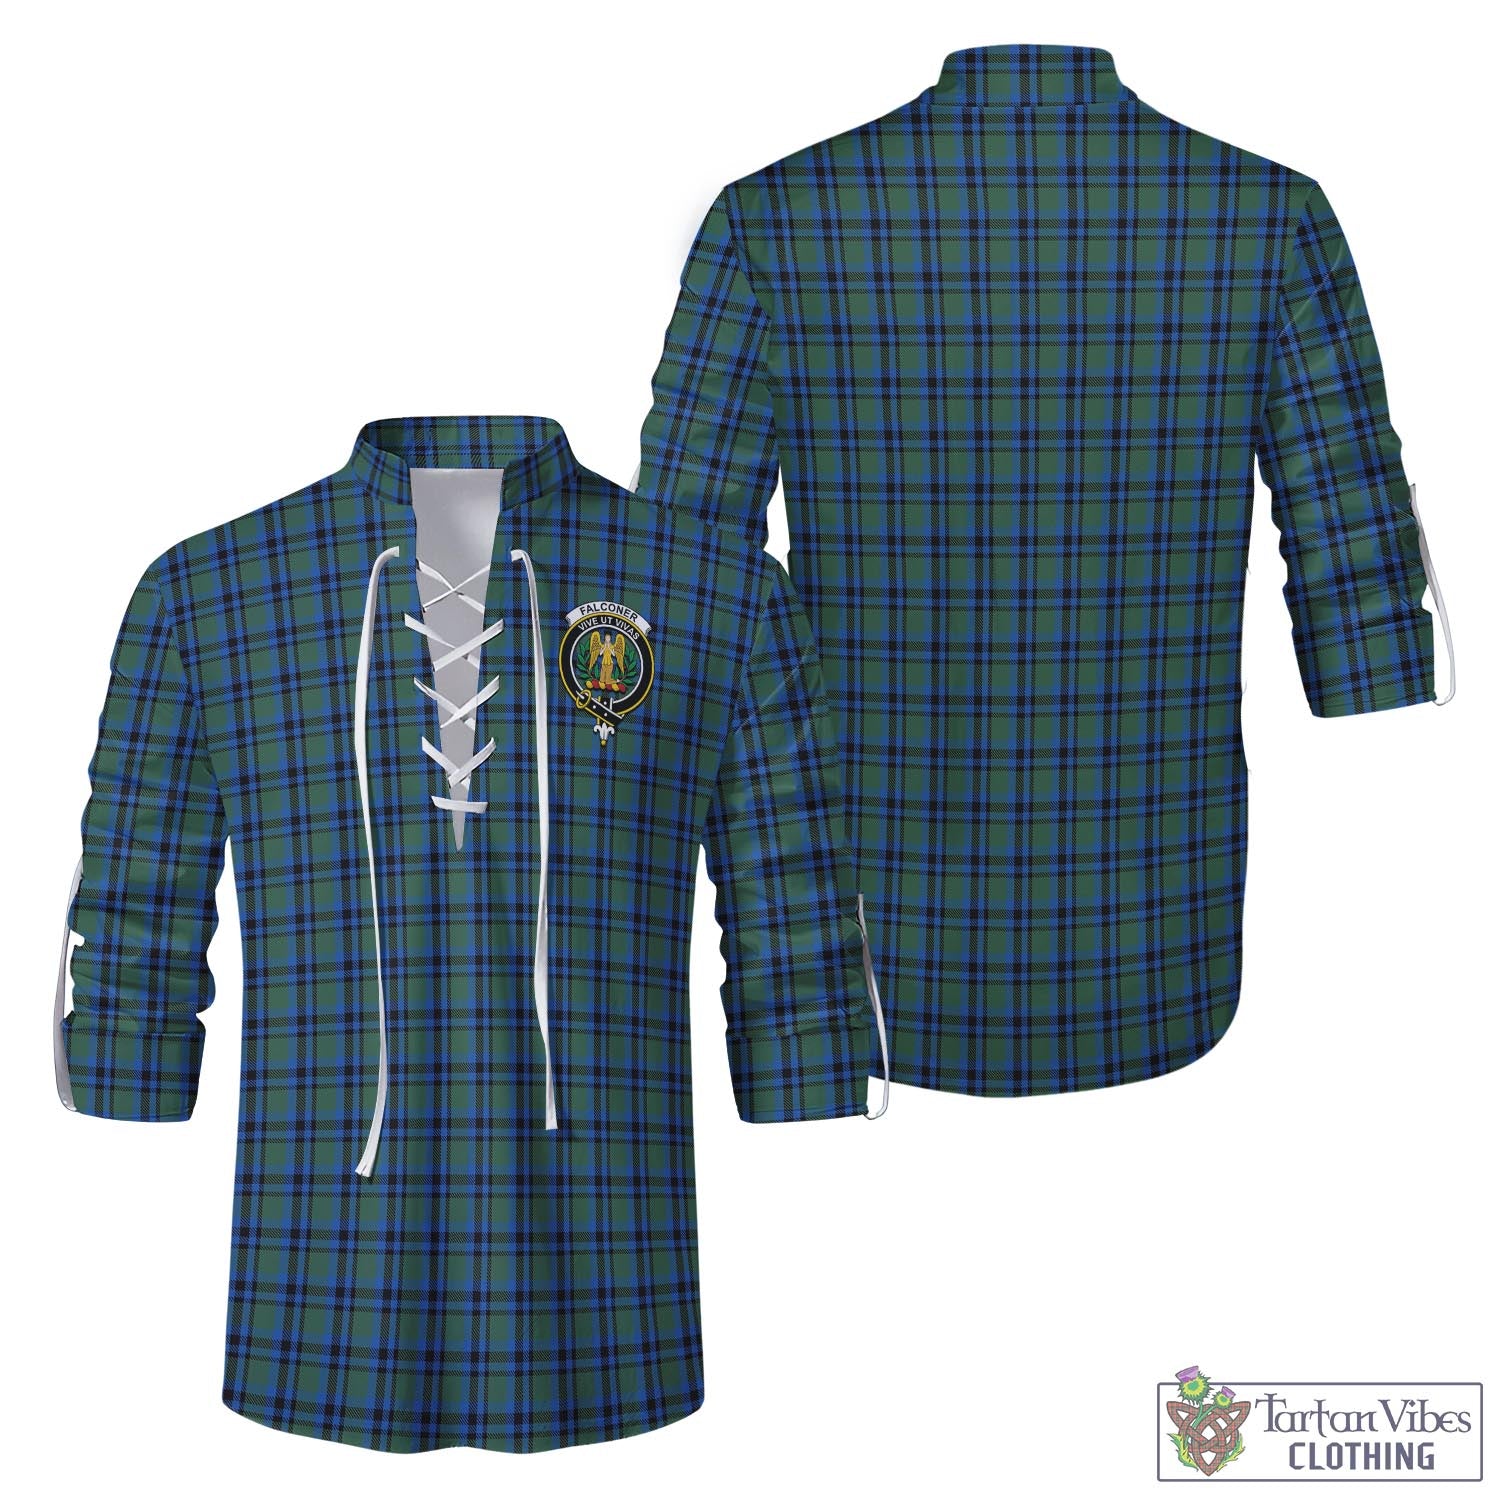 Tartan Vibes Clothing Falconer Tartan Men's Scottish Traditional Jacobite Ghillie Kilt Shirt with Family Crest